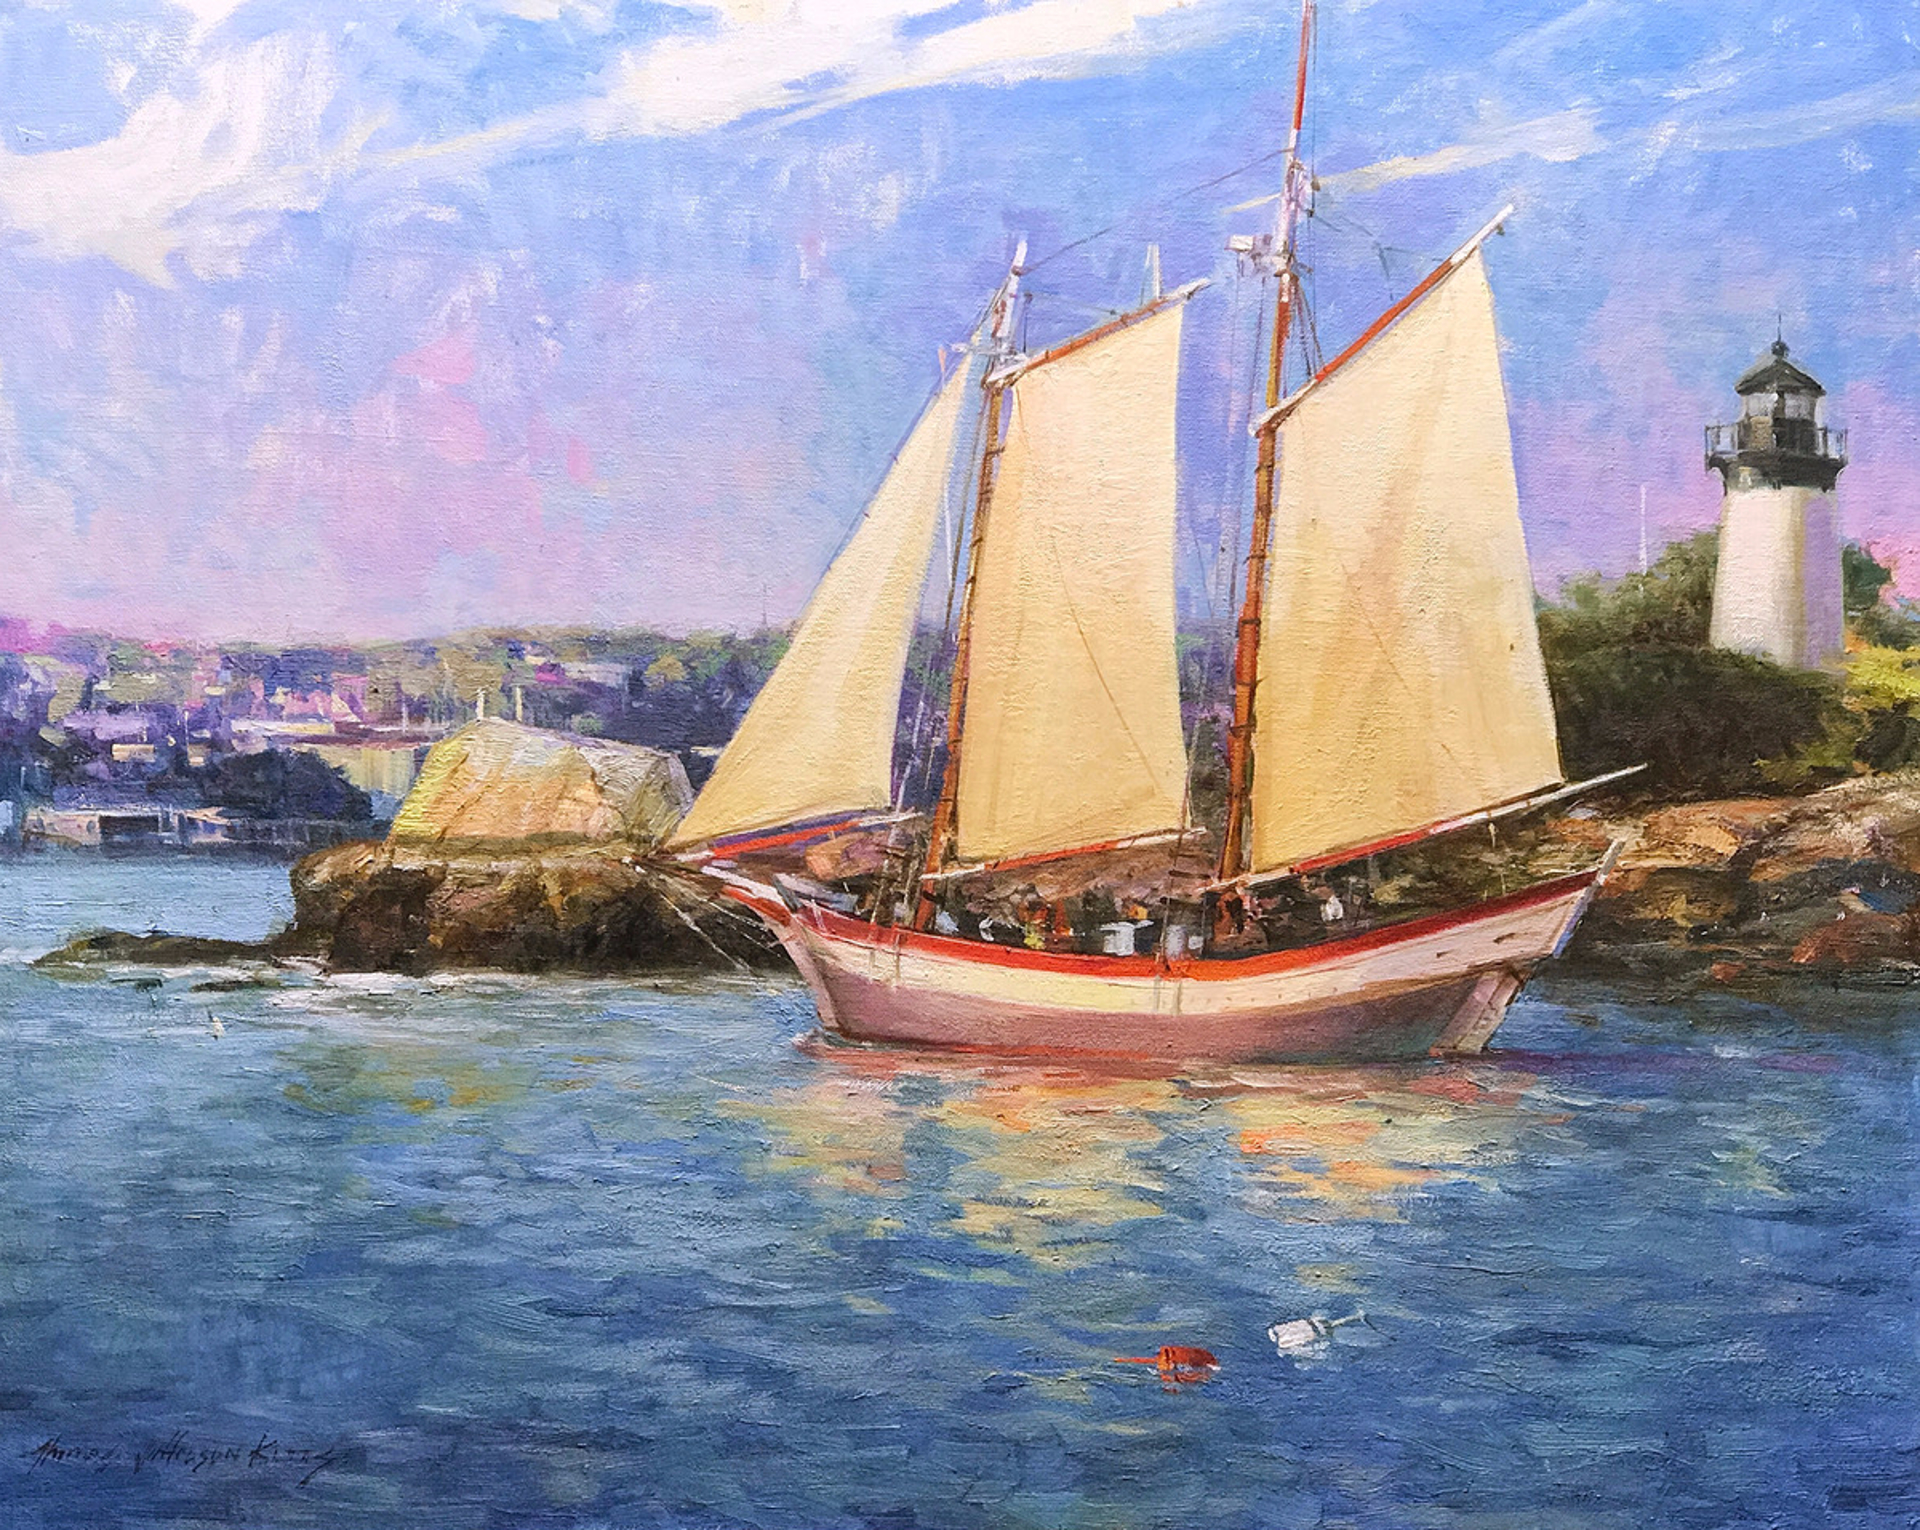 Sailing Past 10 Pound Island by Thomas Kitts